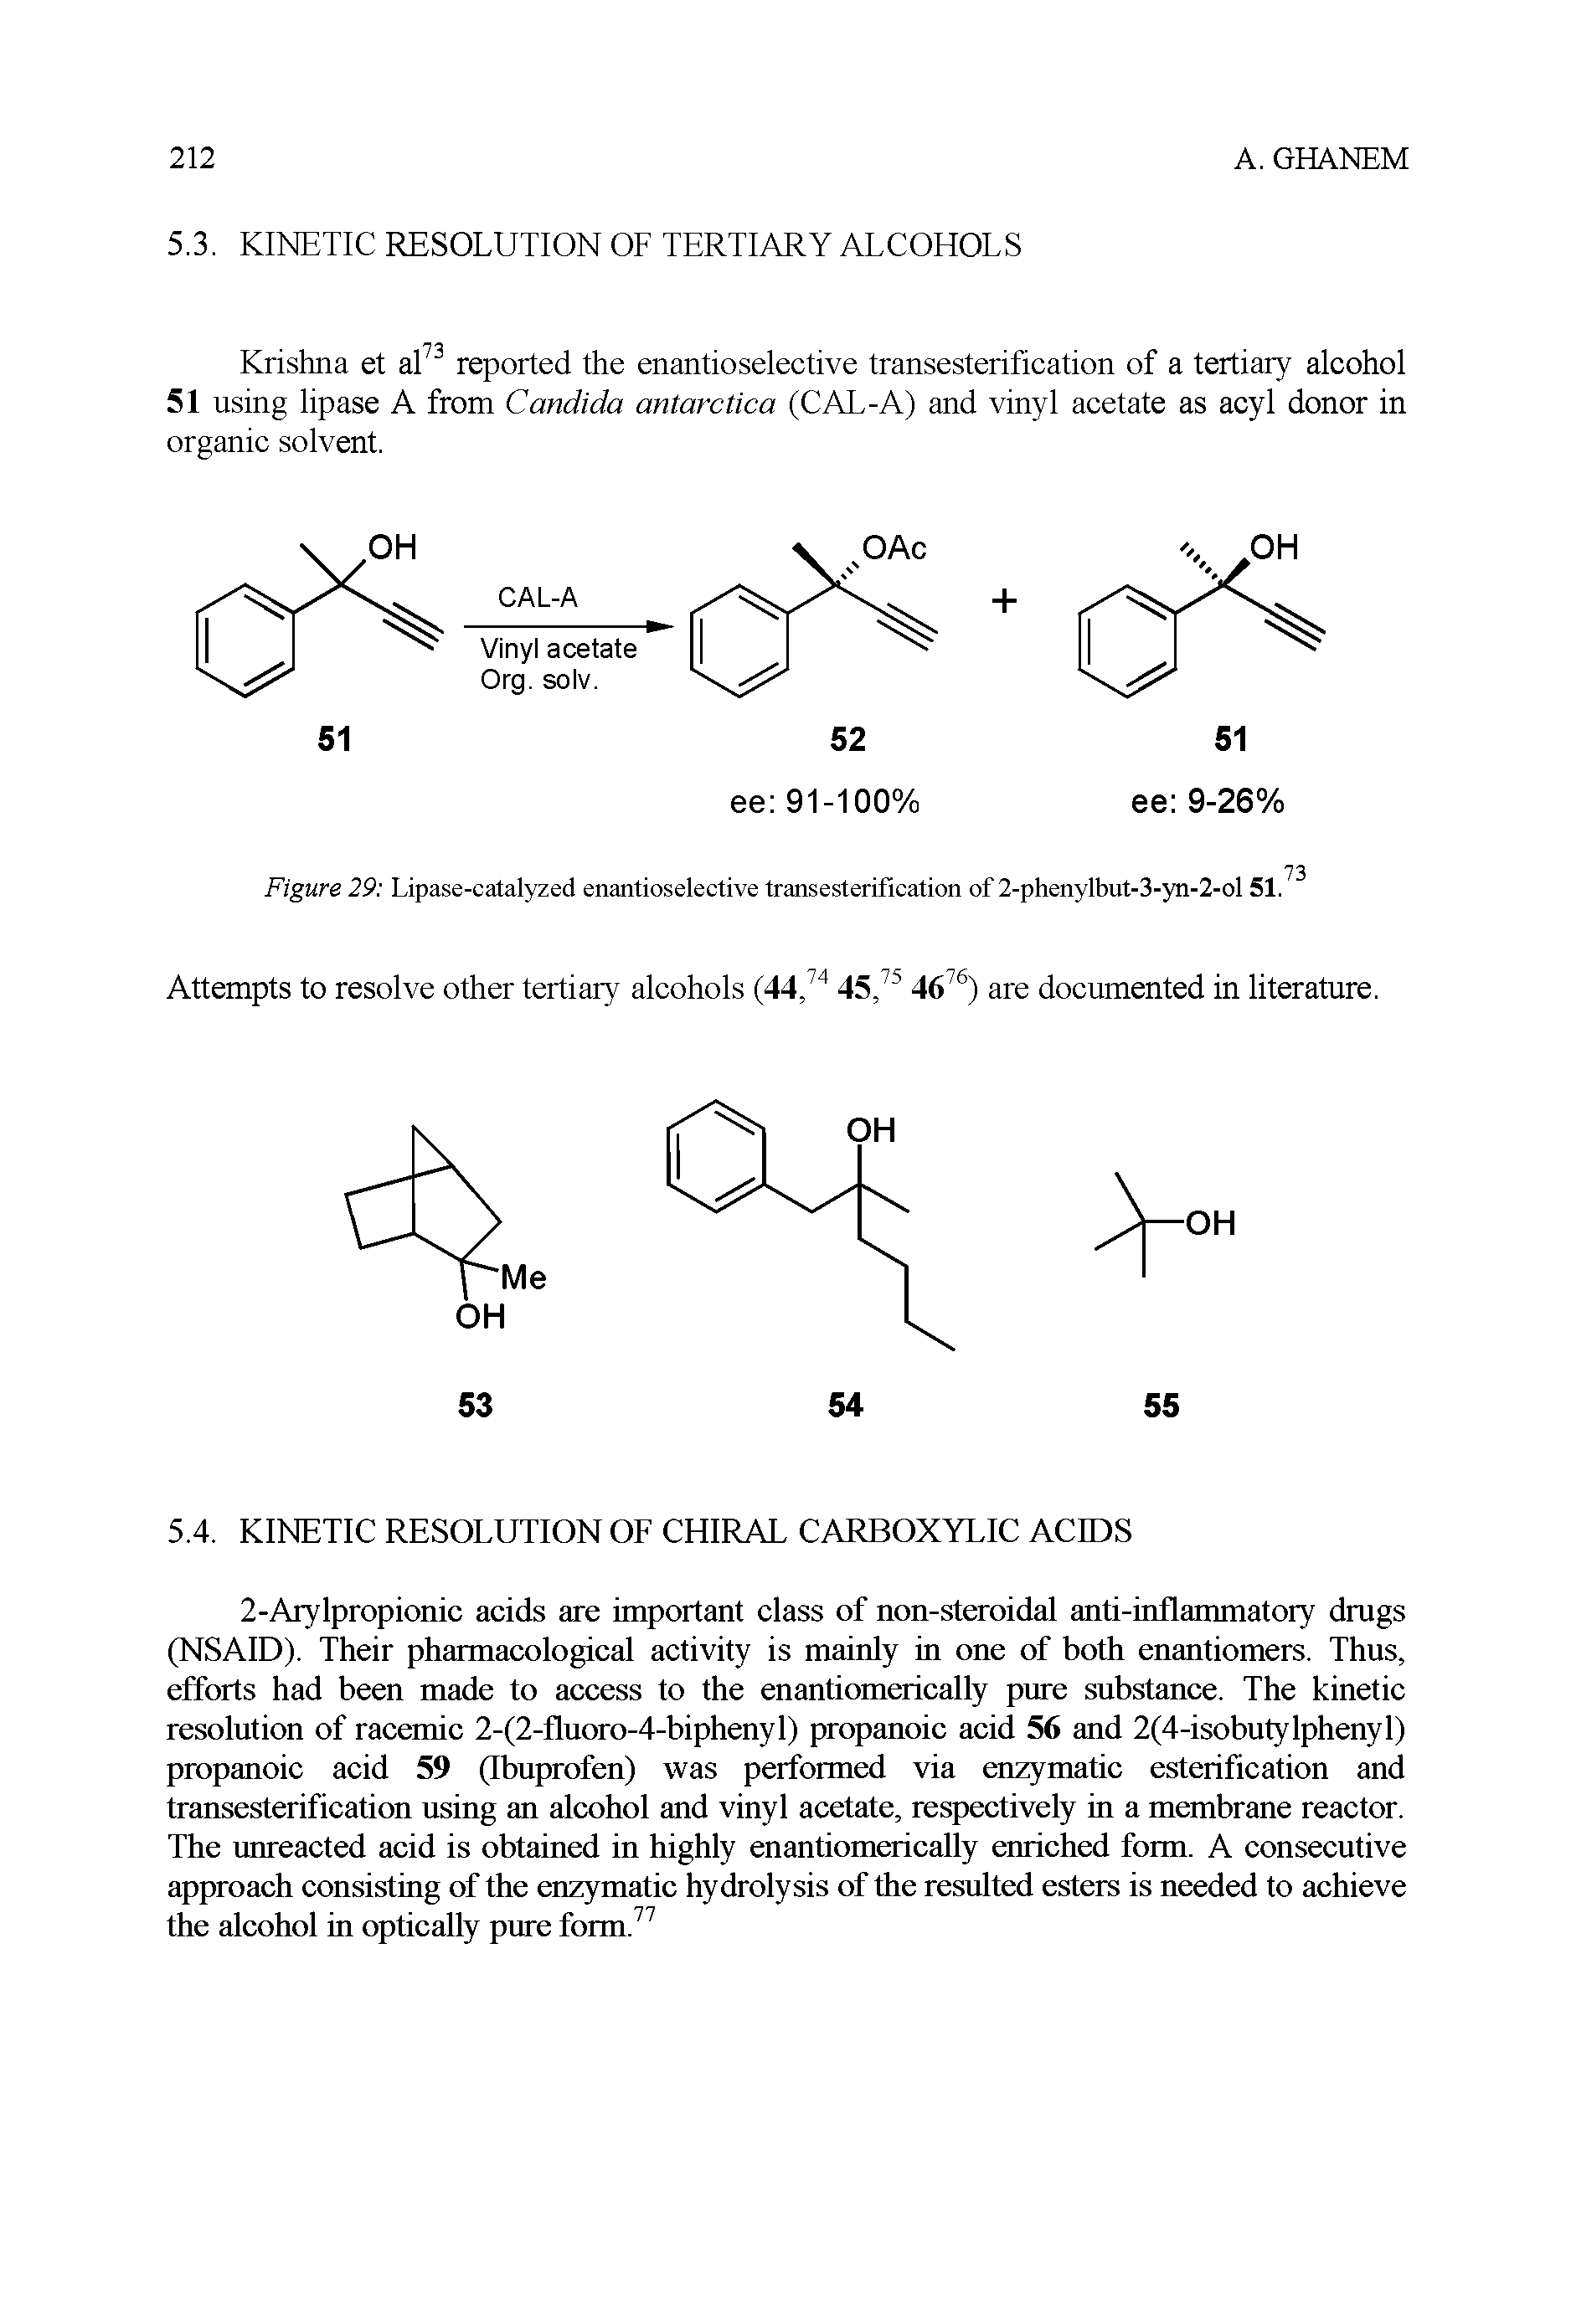 Figure 29 Lipase-catalyzed enantioselective transesterification of 2-phenylbut-3-yn-2-ol 51.